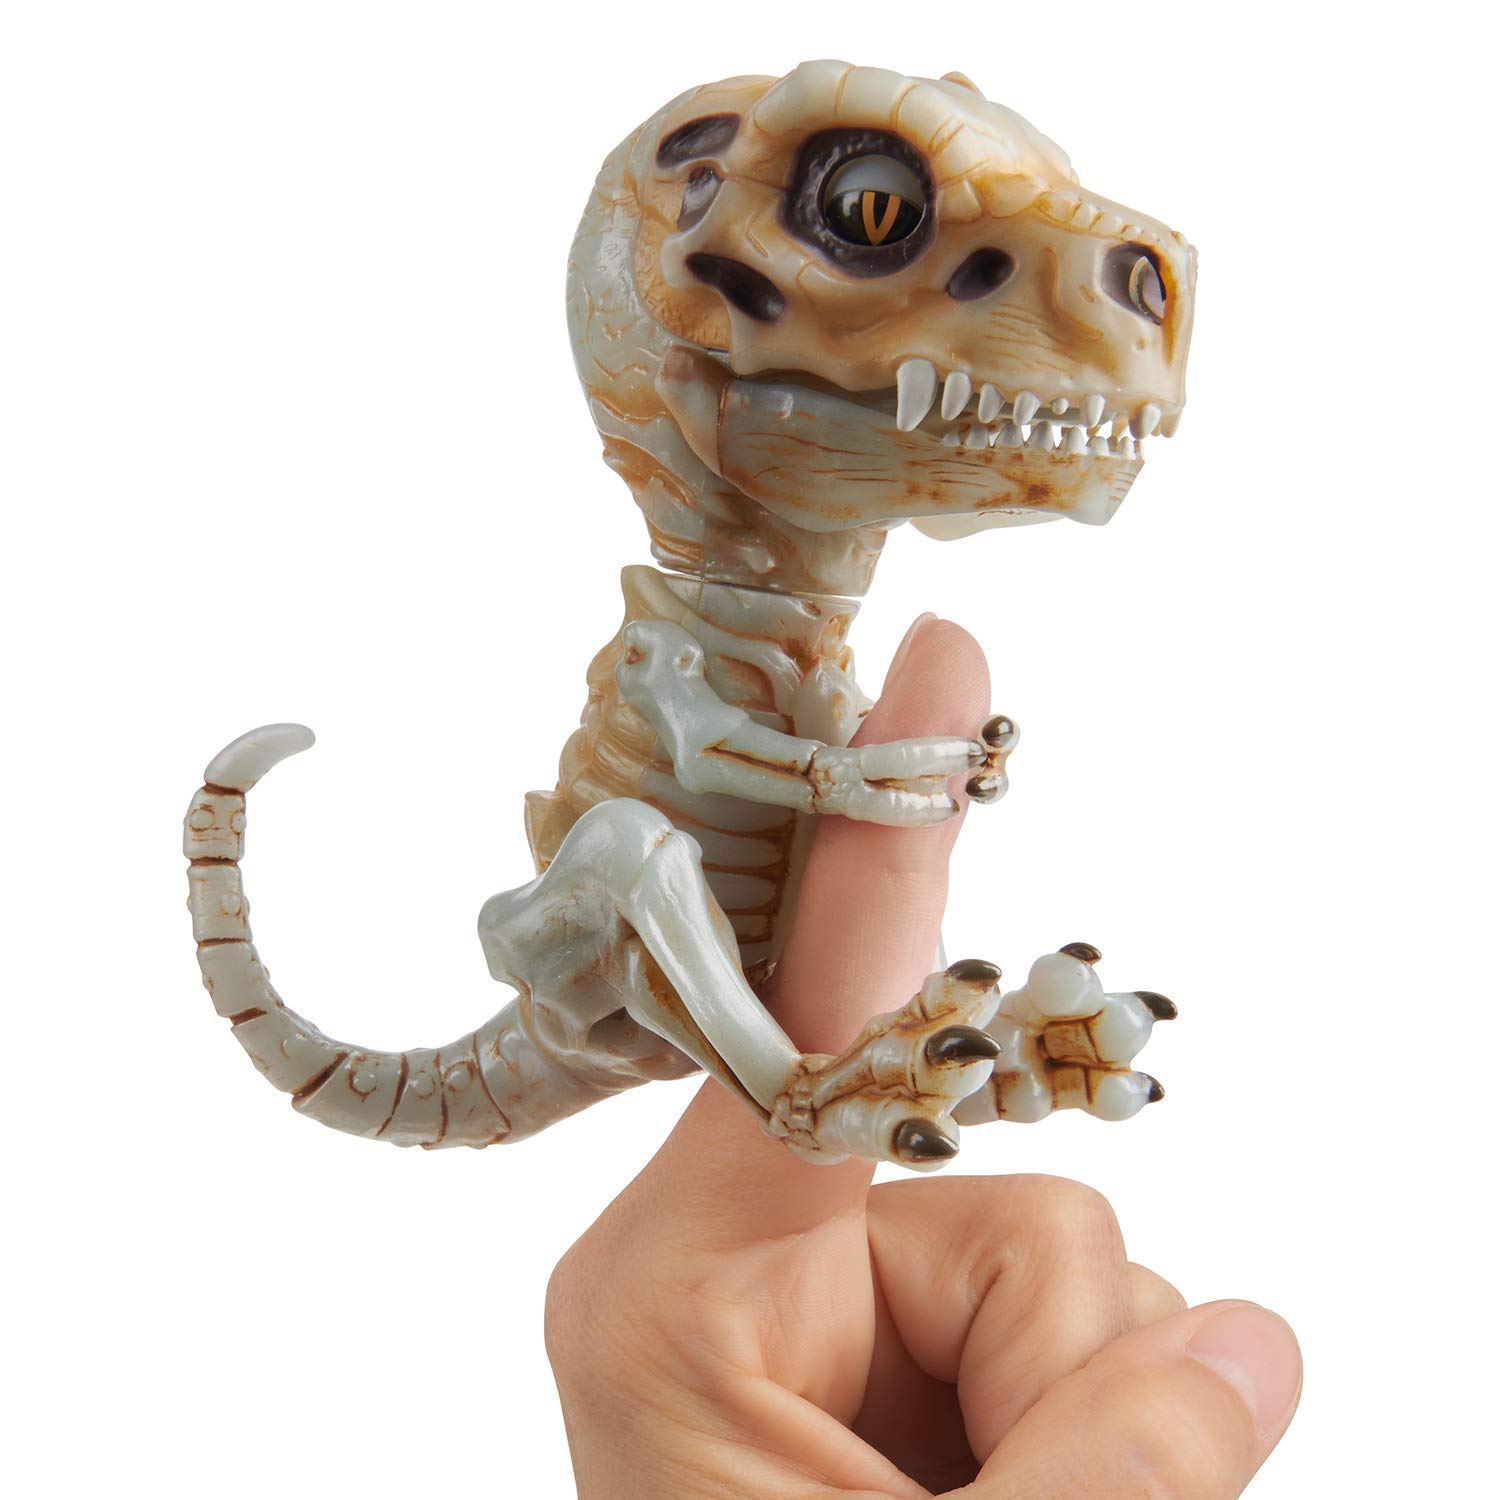 Интерактивная игрушка Fingerlings - Скелетон Дум